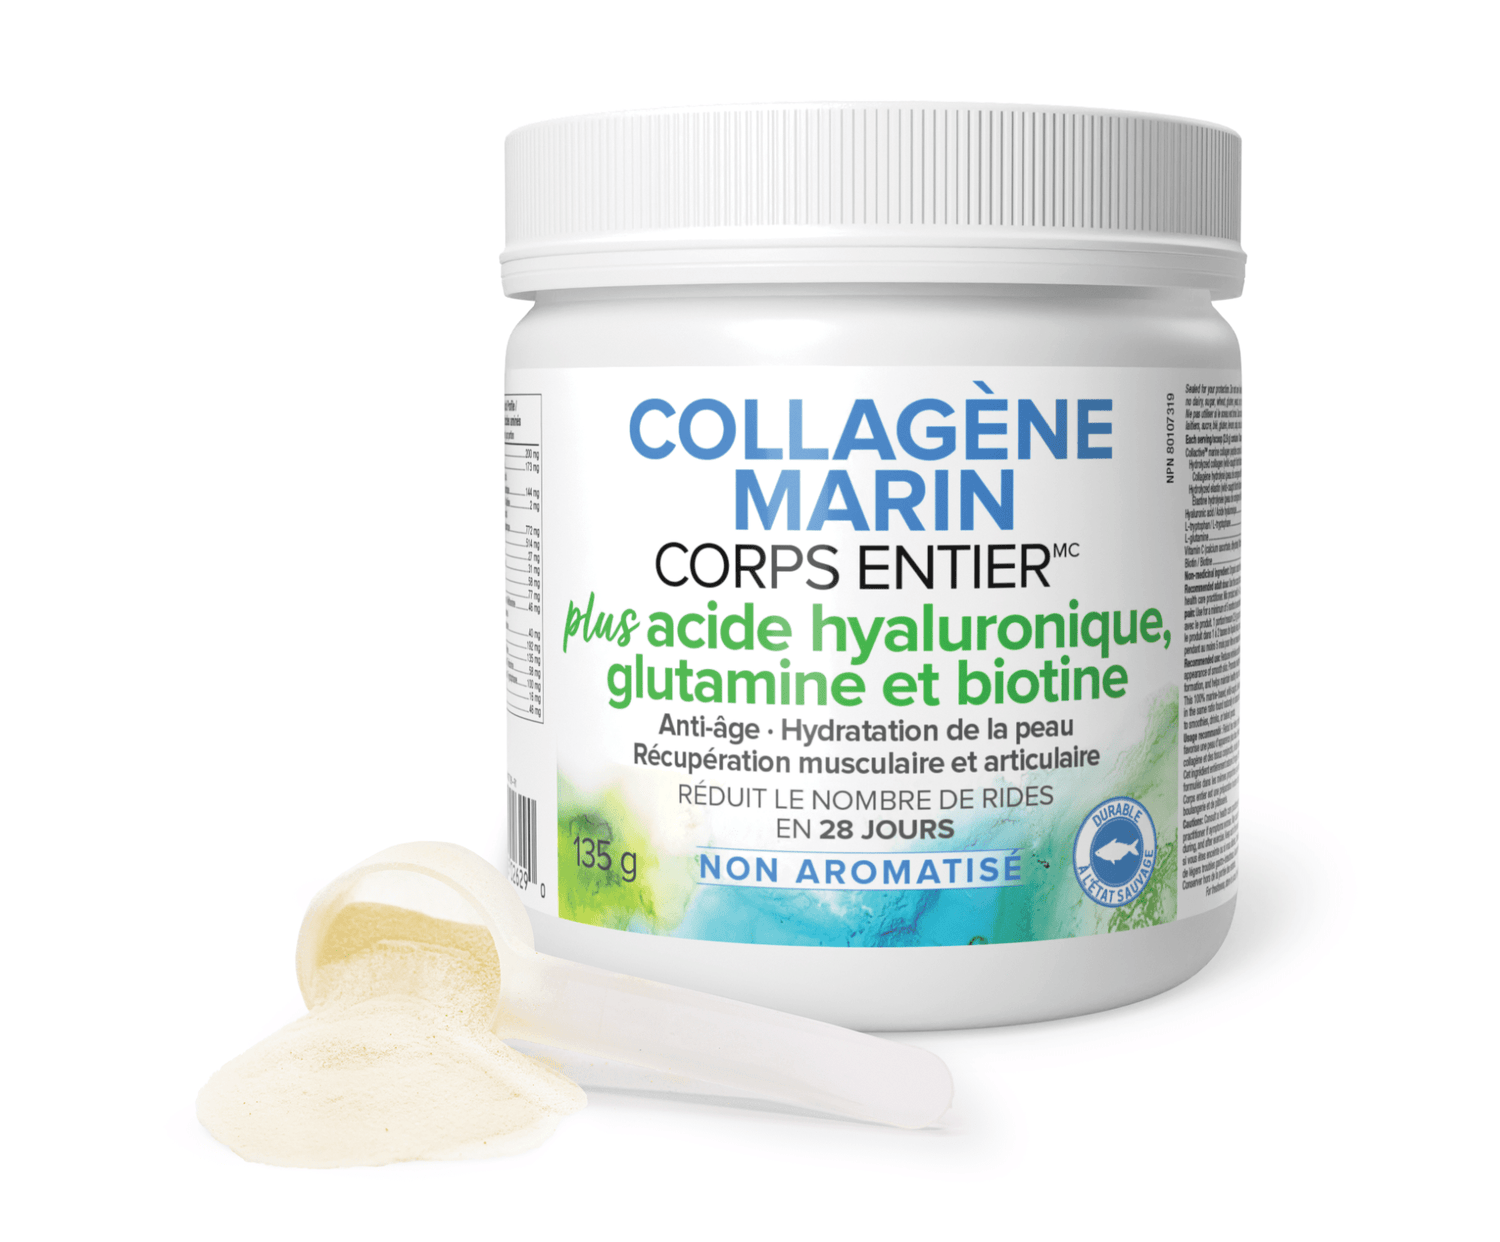 Collagène marin Corps entier plus acide hyaluronique, glutamine et biotine, non aromatisé, Collagène Corps Entier|v|image|2629